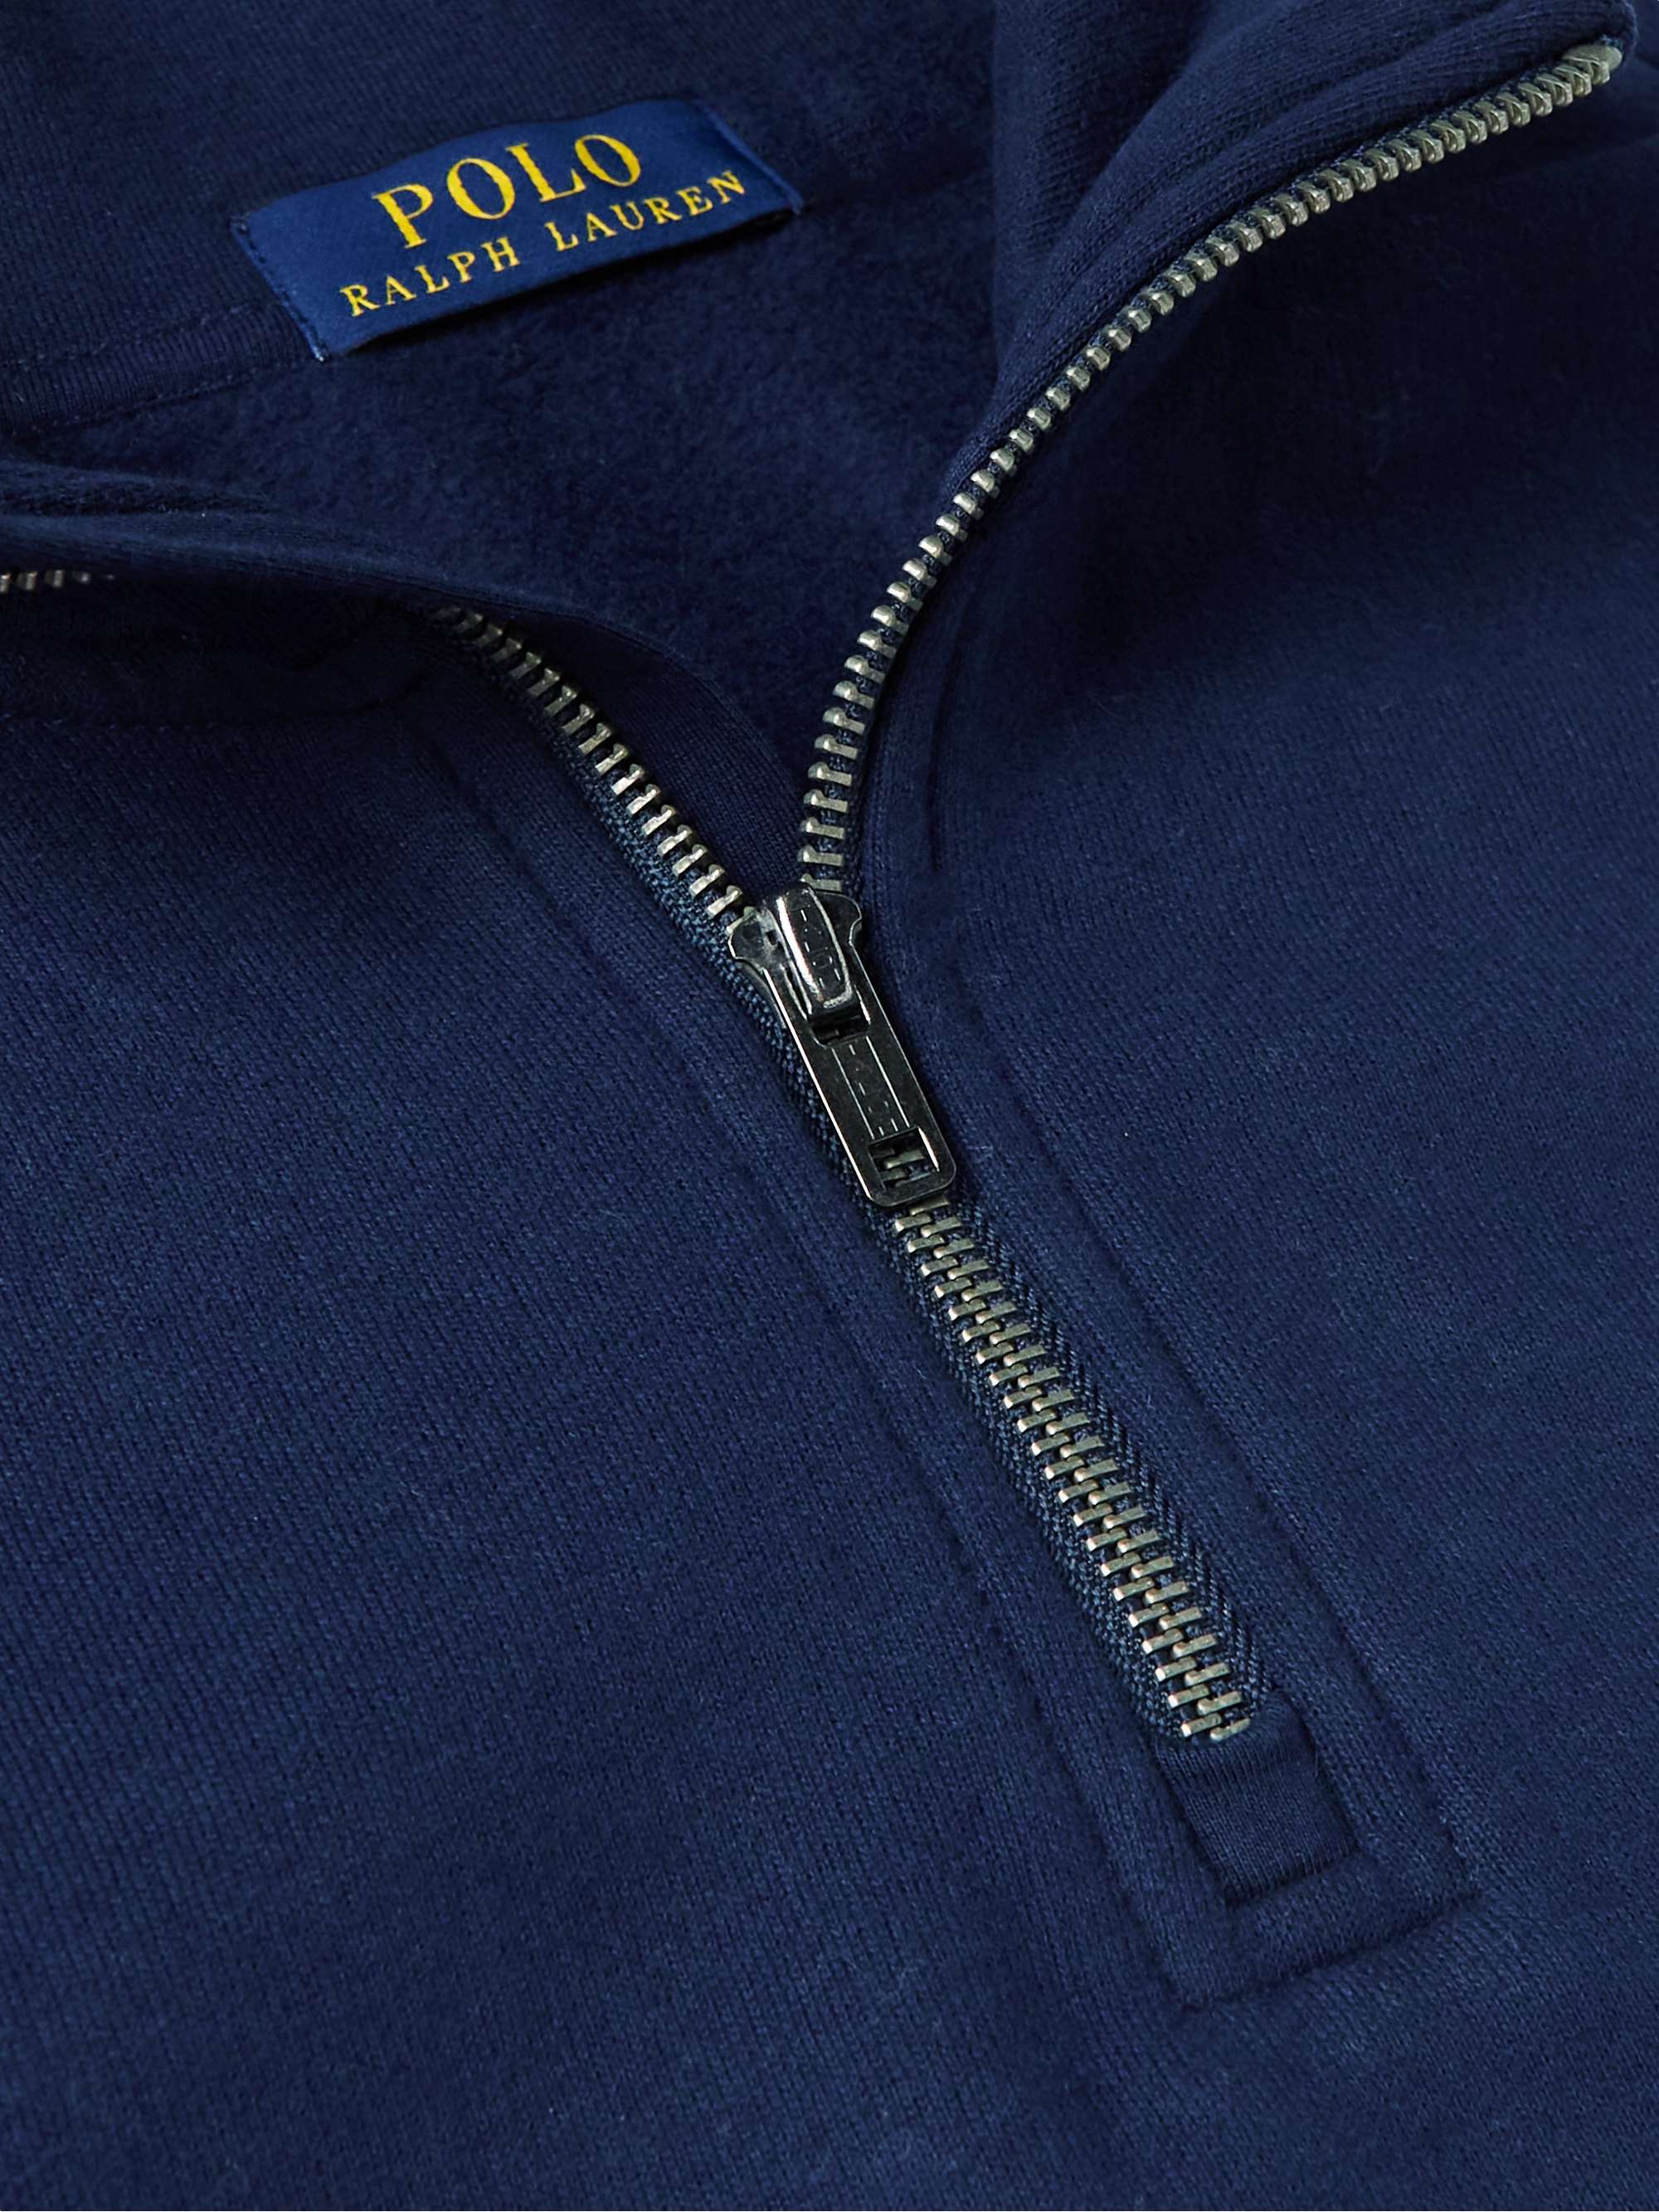 POLO RALPH LAUREN Logo-Embroidered Cotton-Blend Jersey Half-Zip Sweatshirt